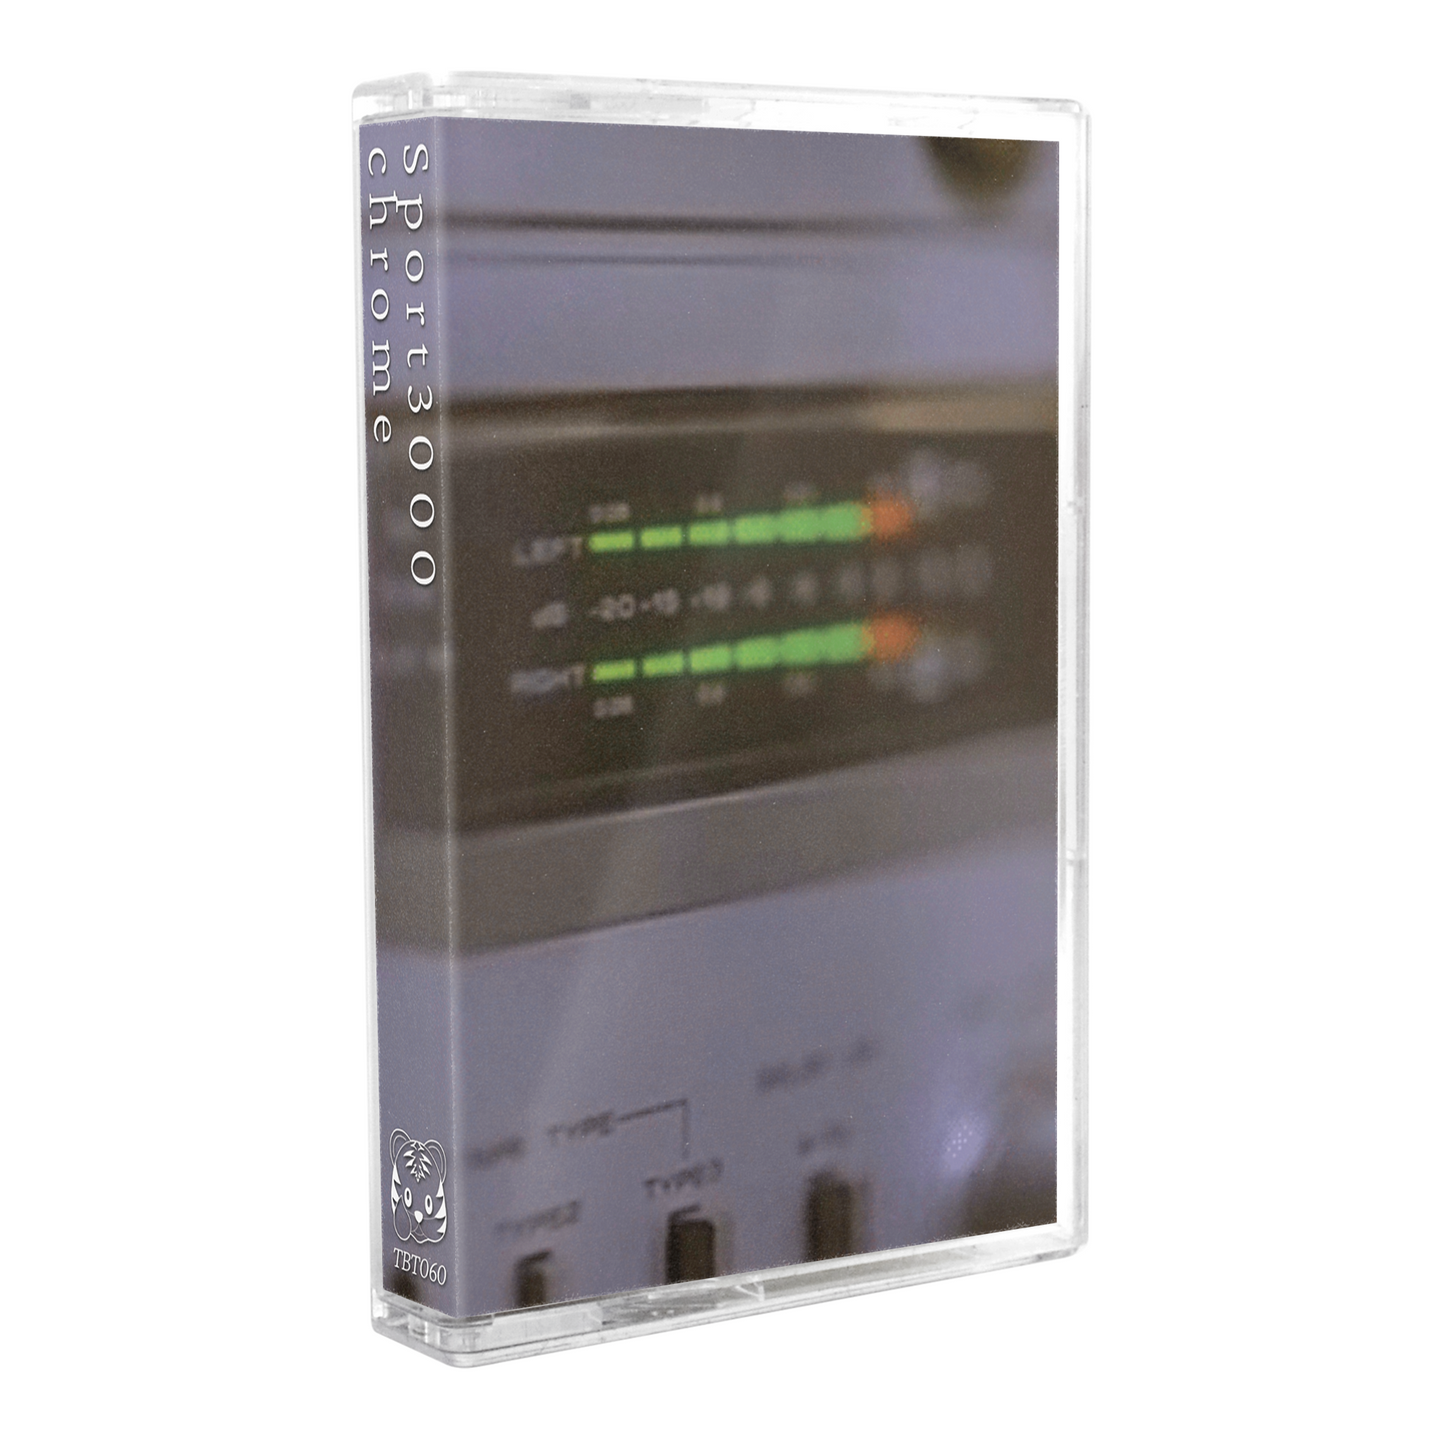 Ｓｐｏｒｔ３０００ - "Chrome" Limited Edition Cassette Tape